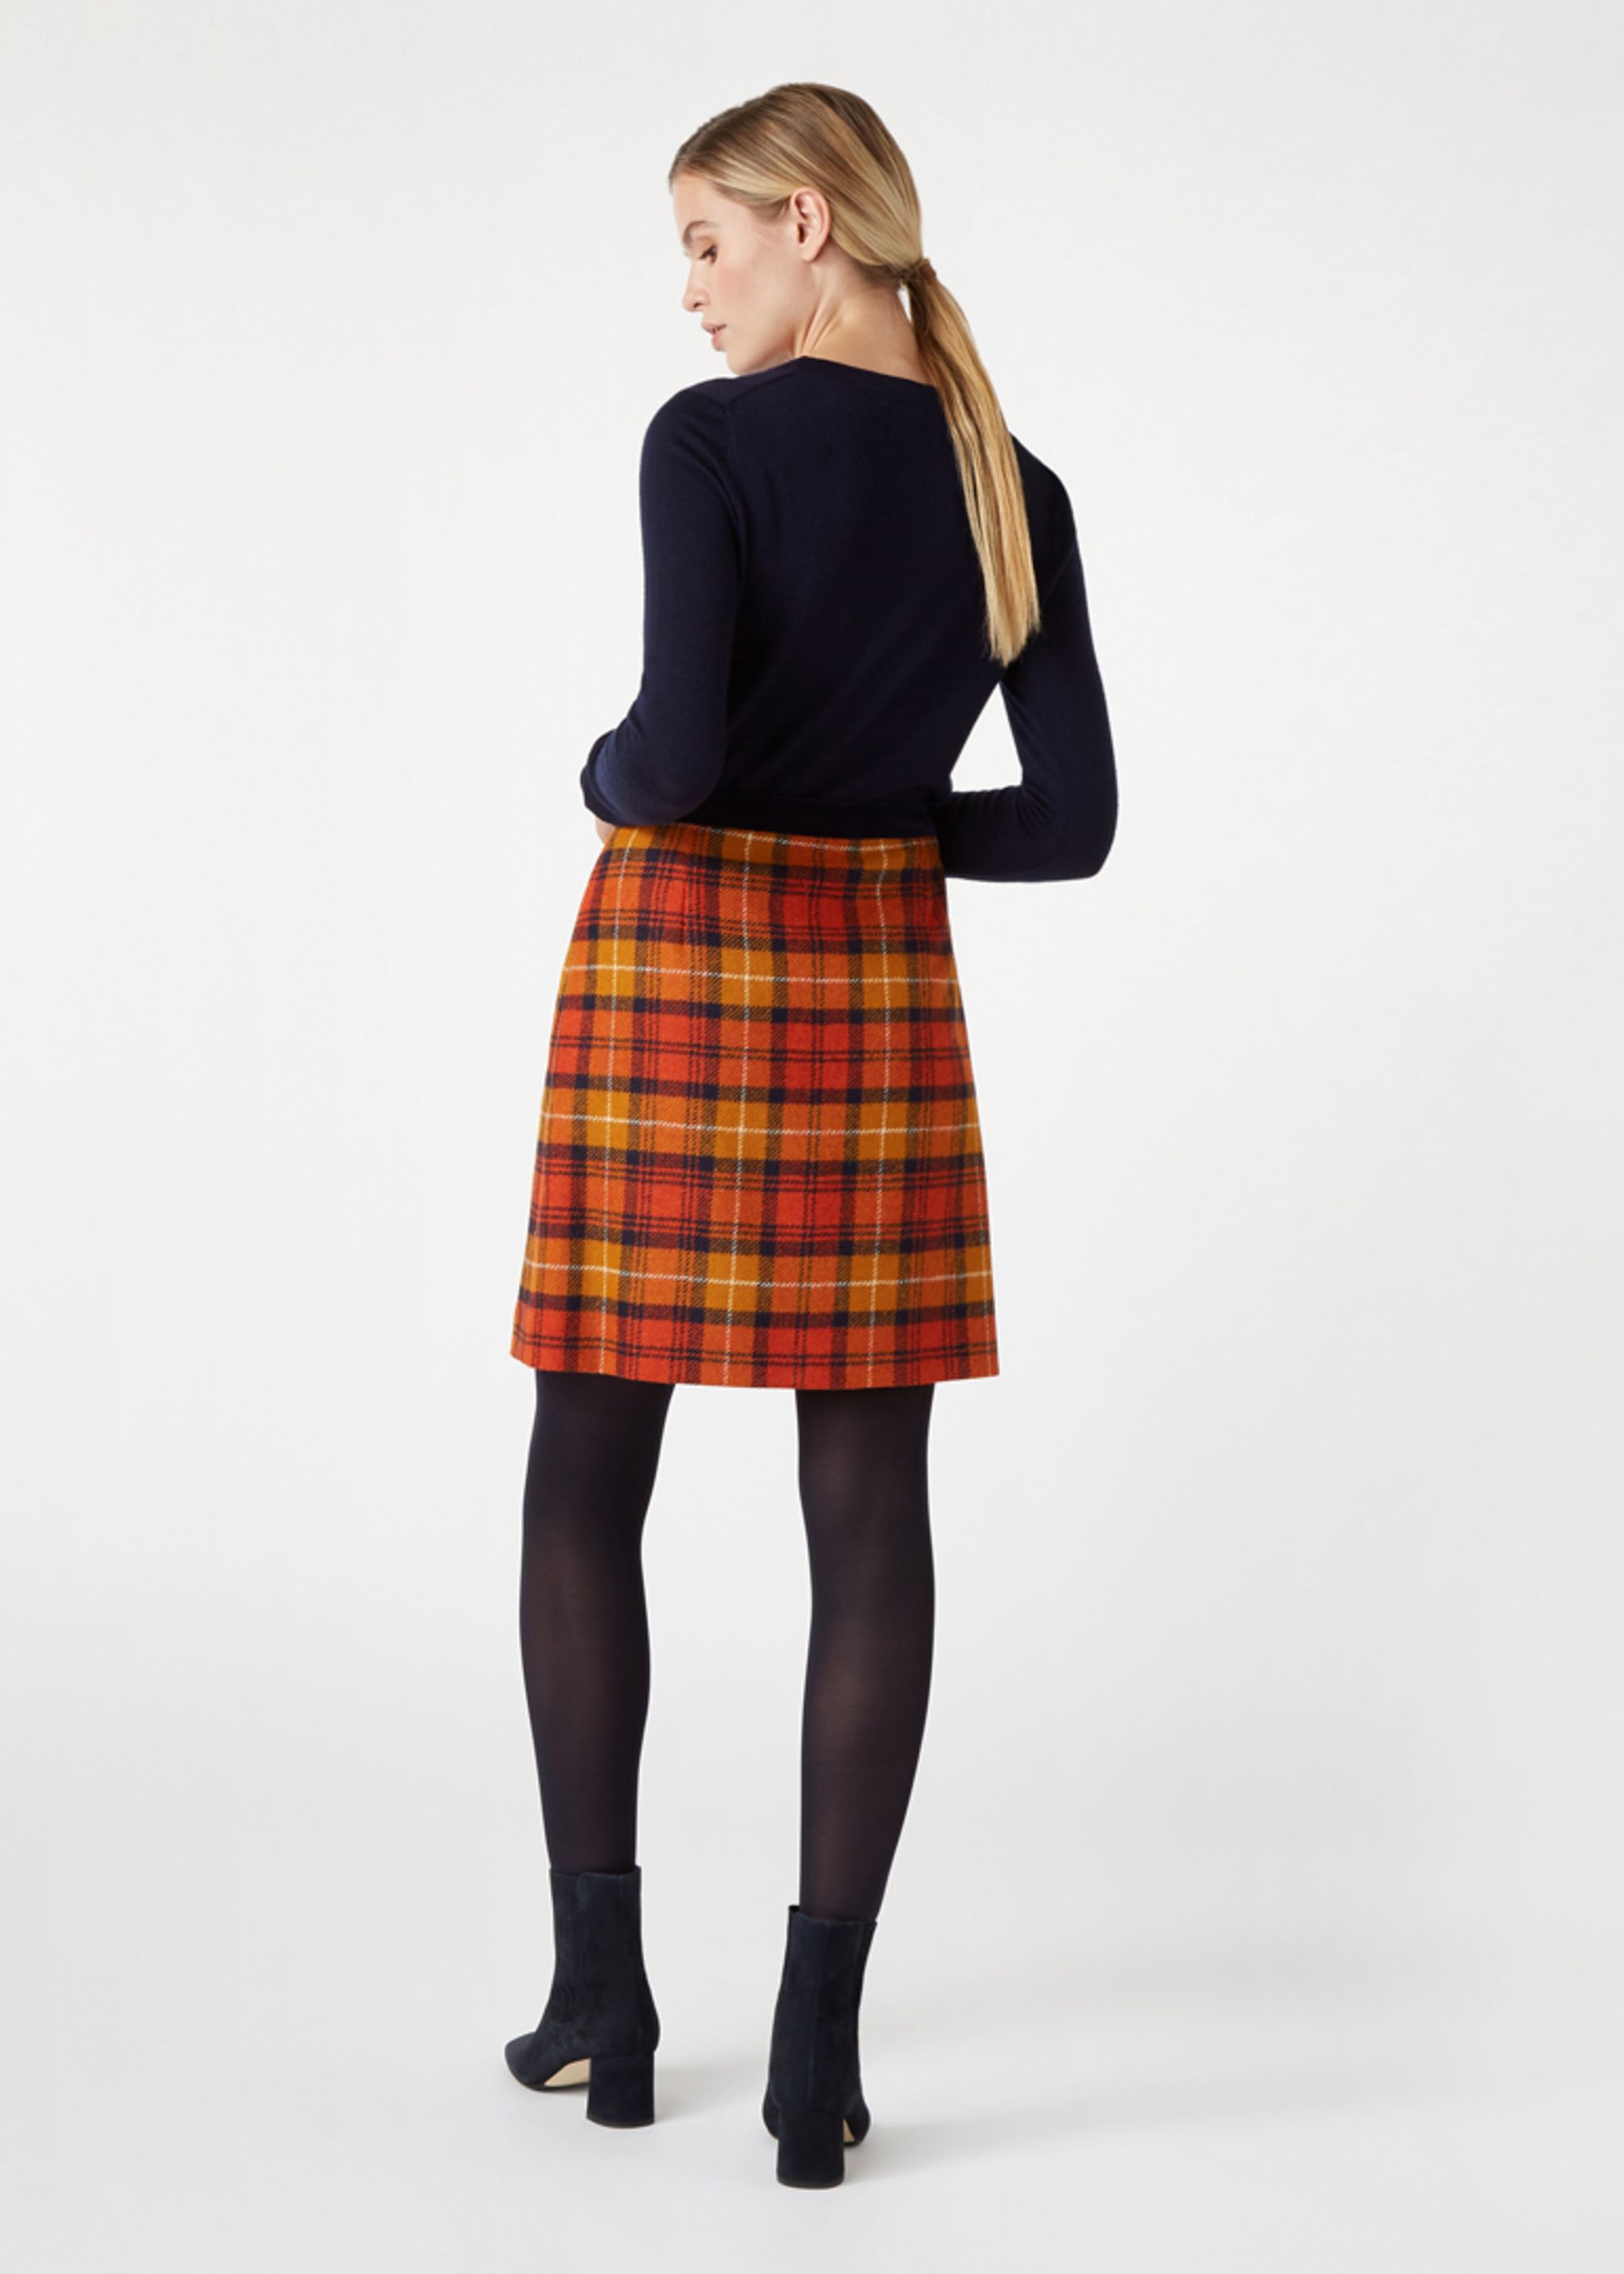 Hobbs Check Christine Wool Skirt Mini A-Line | eBay